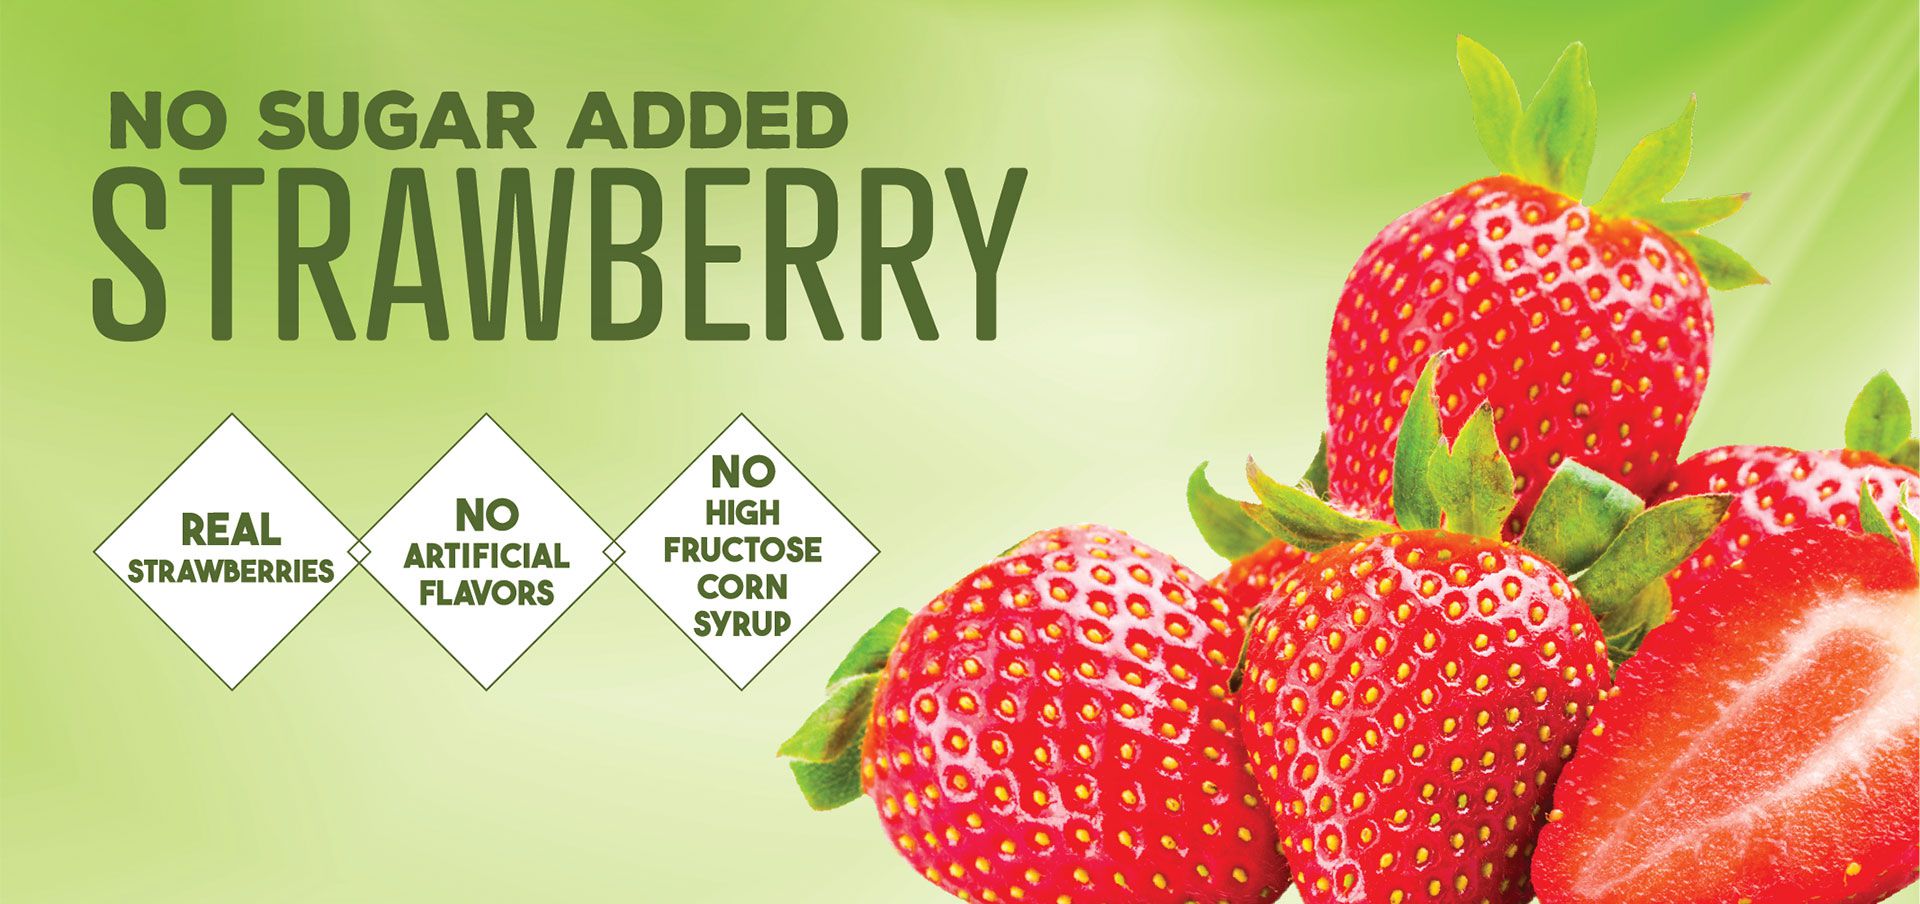 nsa strawberry label image